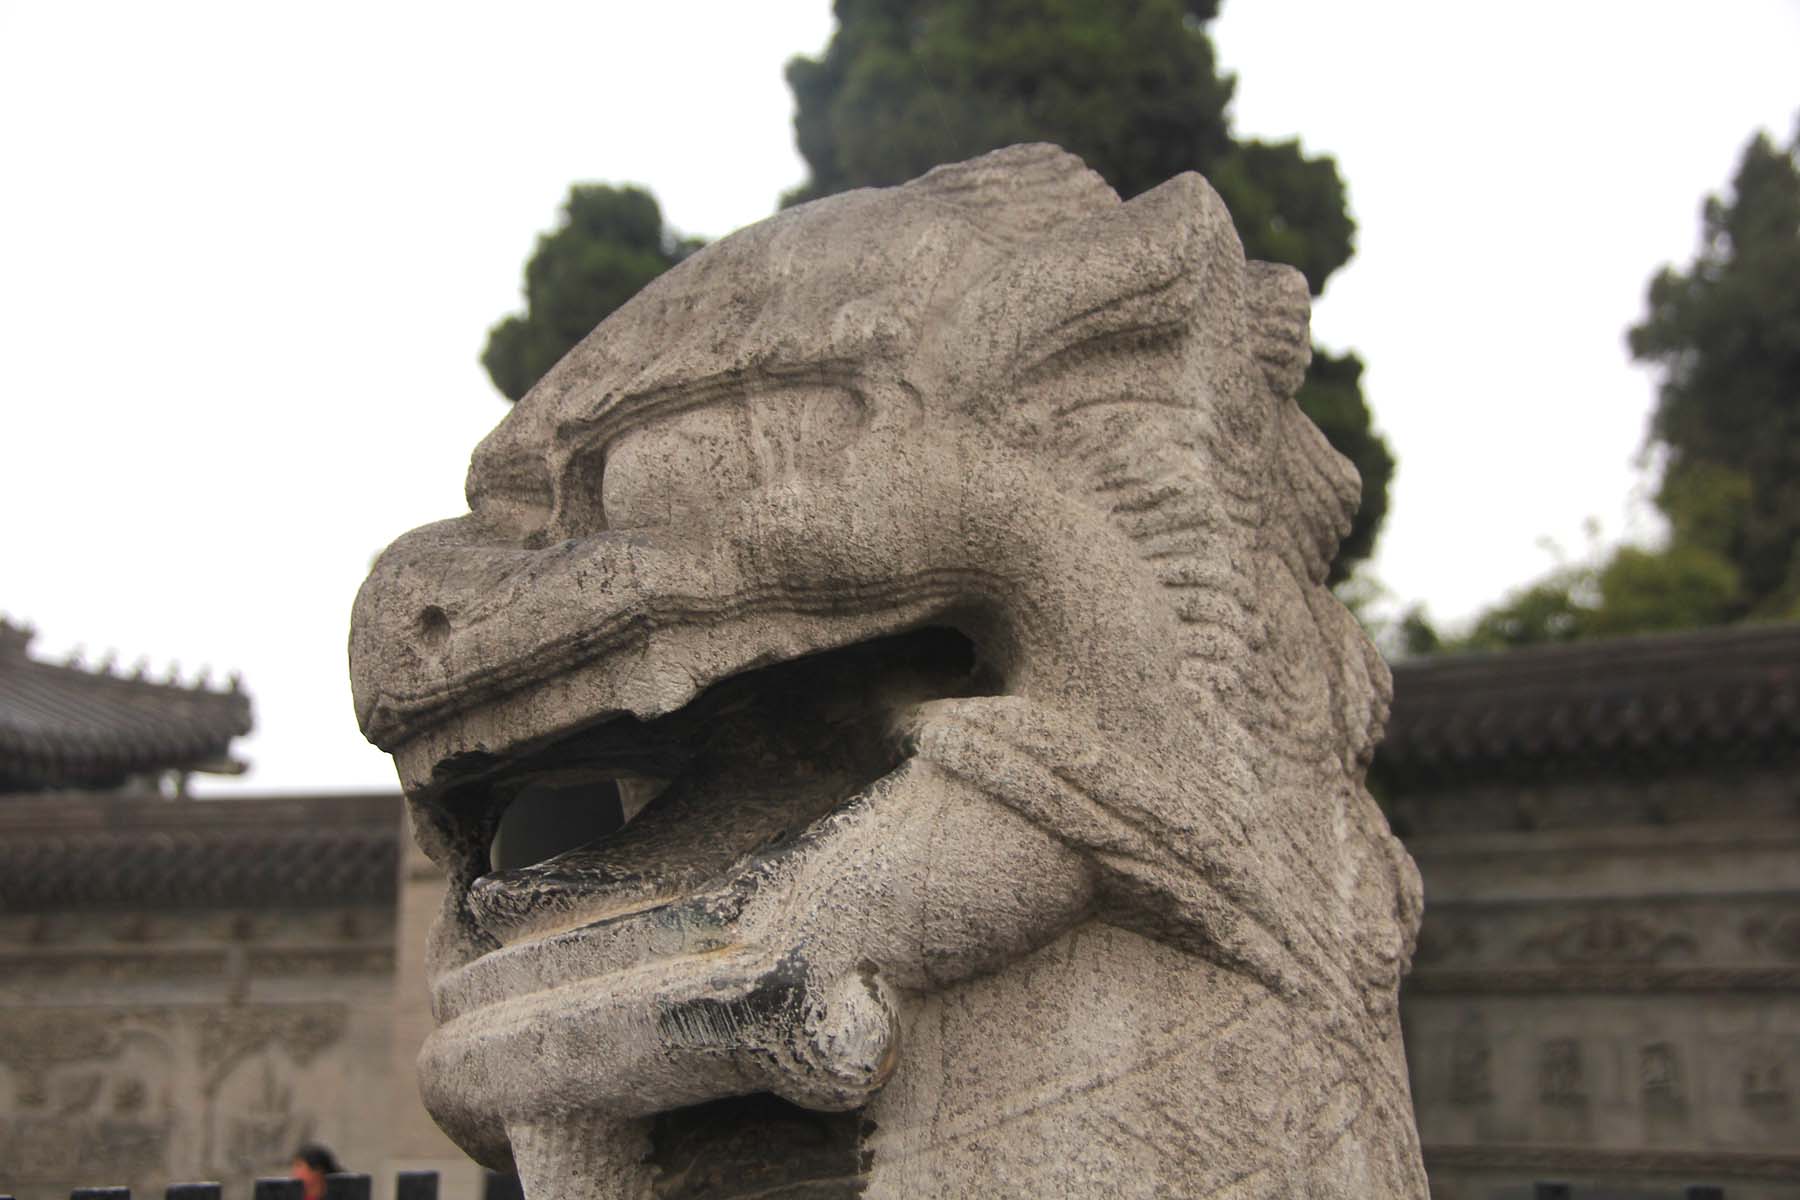 Close-up of the lion sculpture.